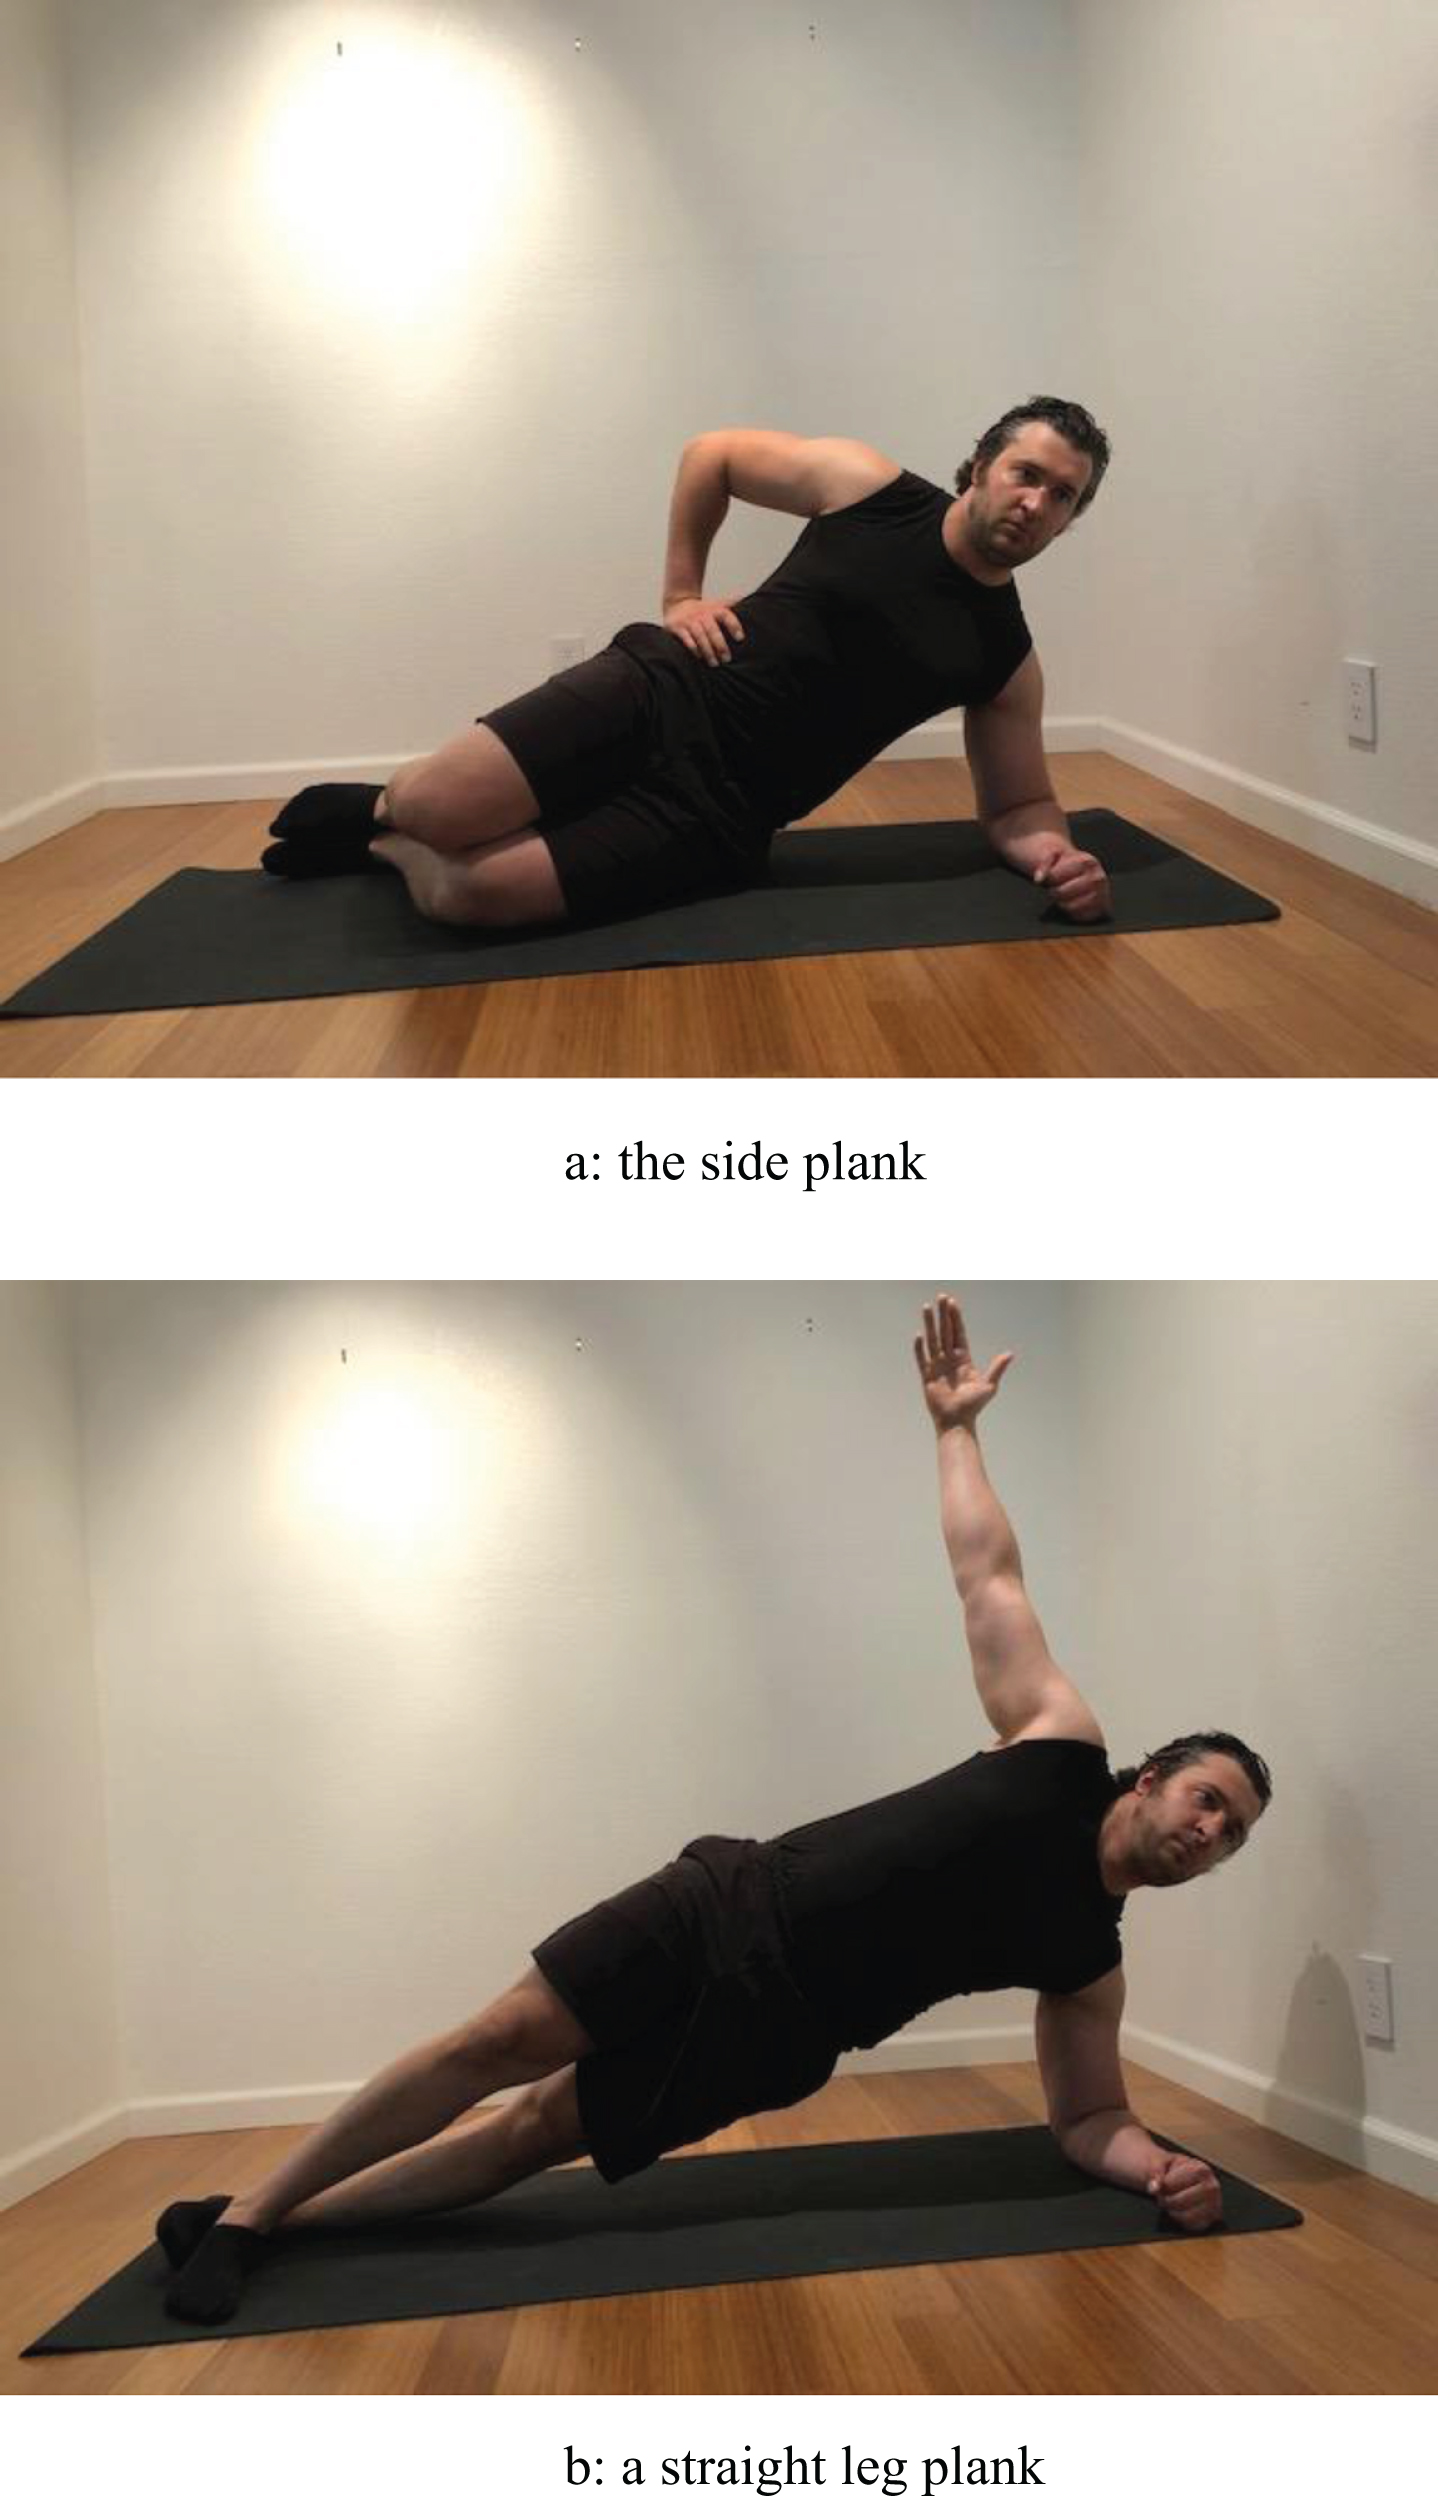 a) The side plank. b) A straight leg plank.